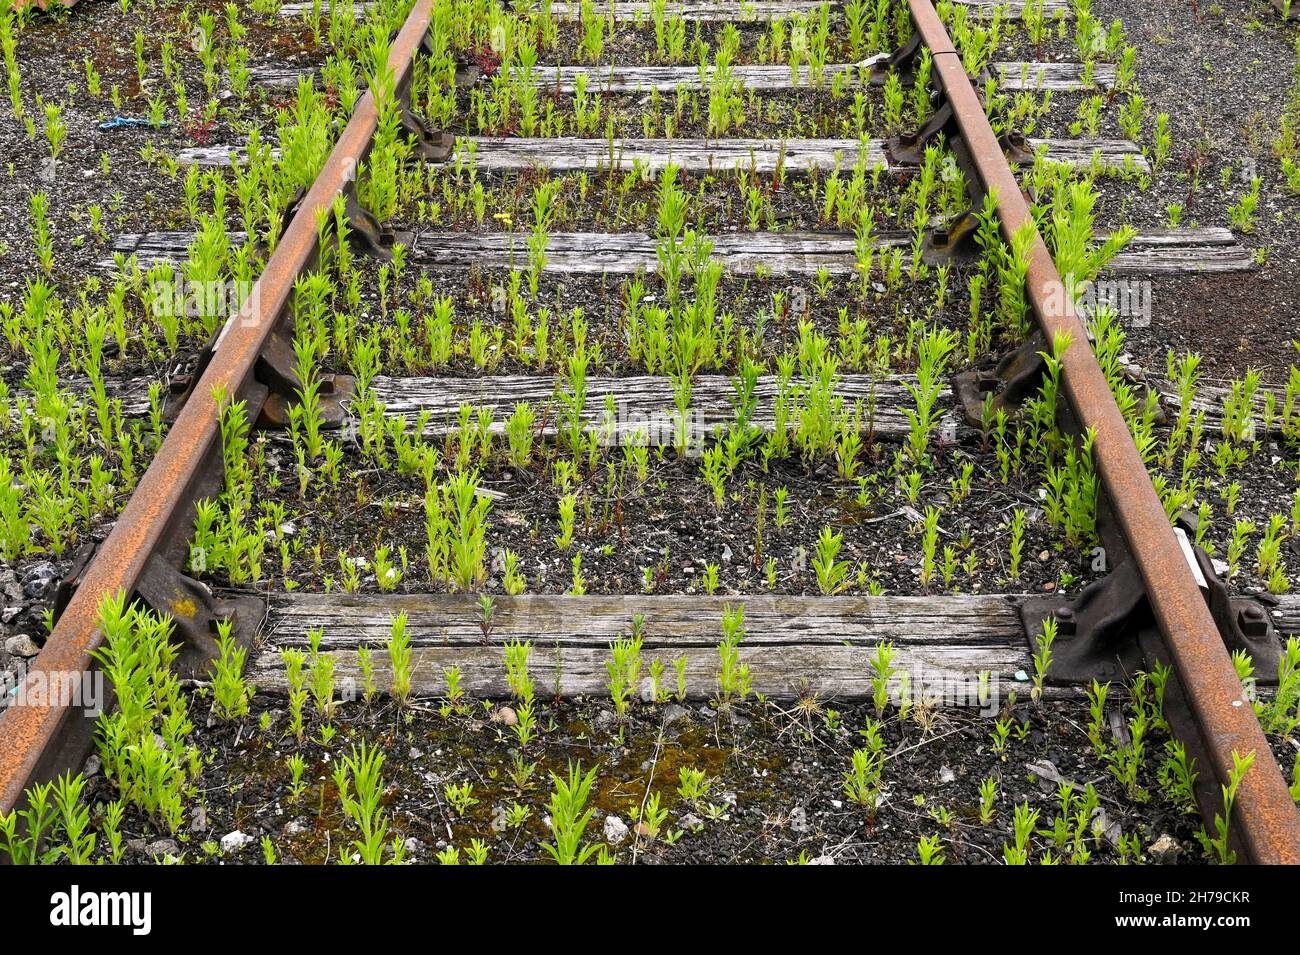 Rusty old railway tracks with weeds growing between the sleepers. No people. Stock Photo